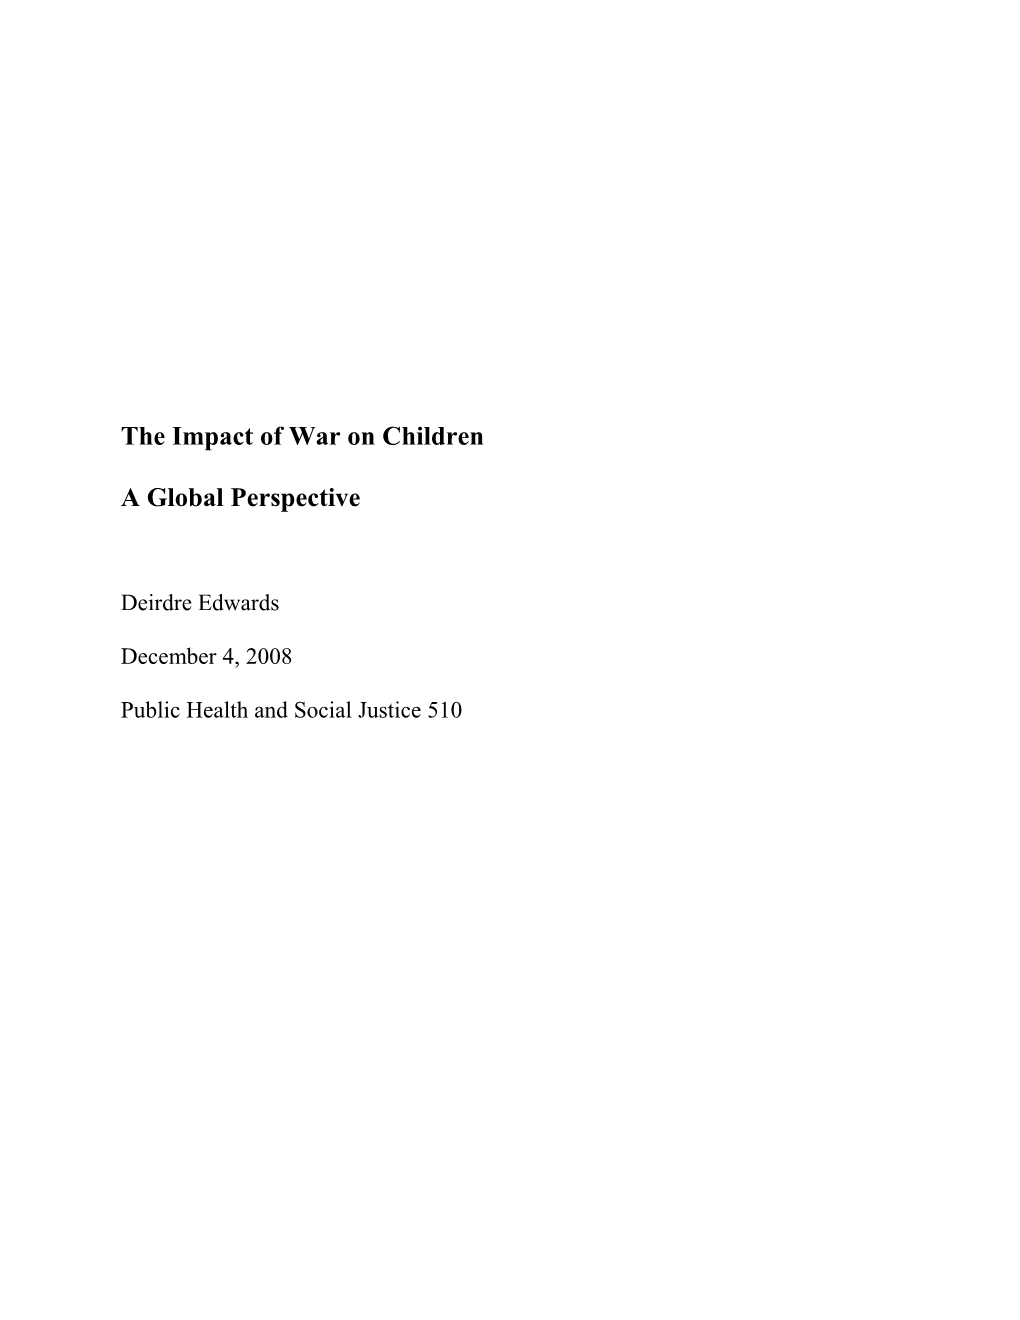 Deirdre Edwardsthe Impact of War on Childrendecember 3, 2008